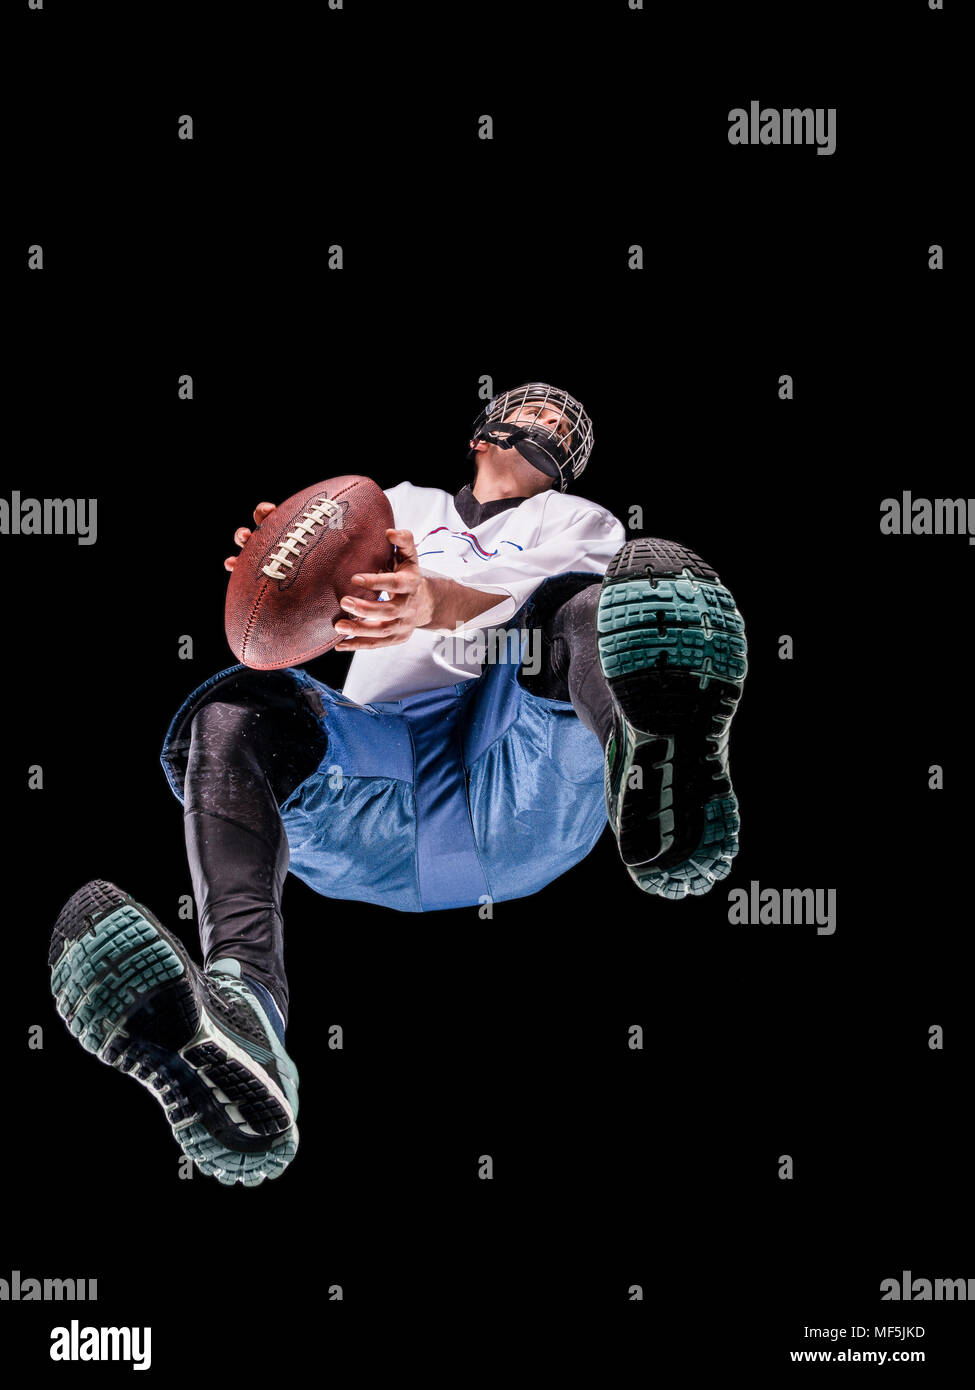 Atleta a giocare a calcio, vista dal basso Foto Stock